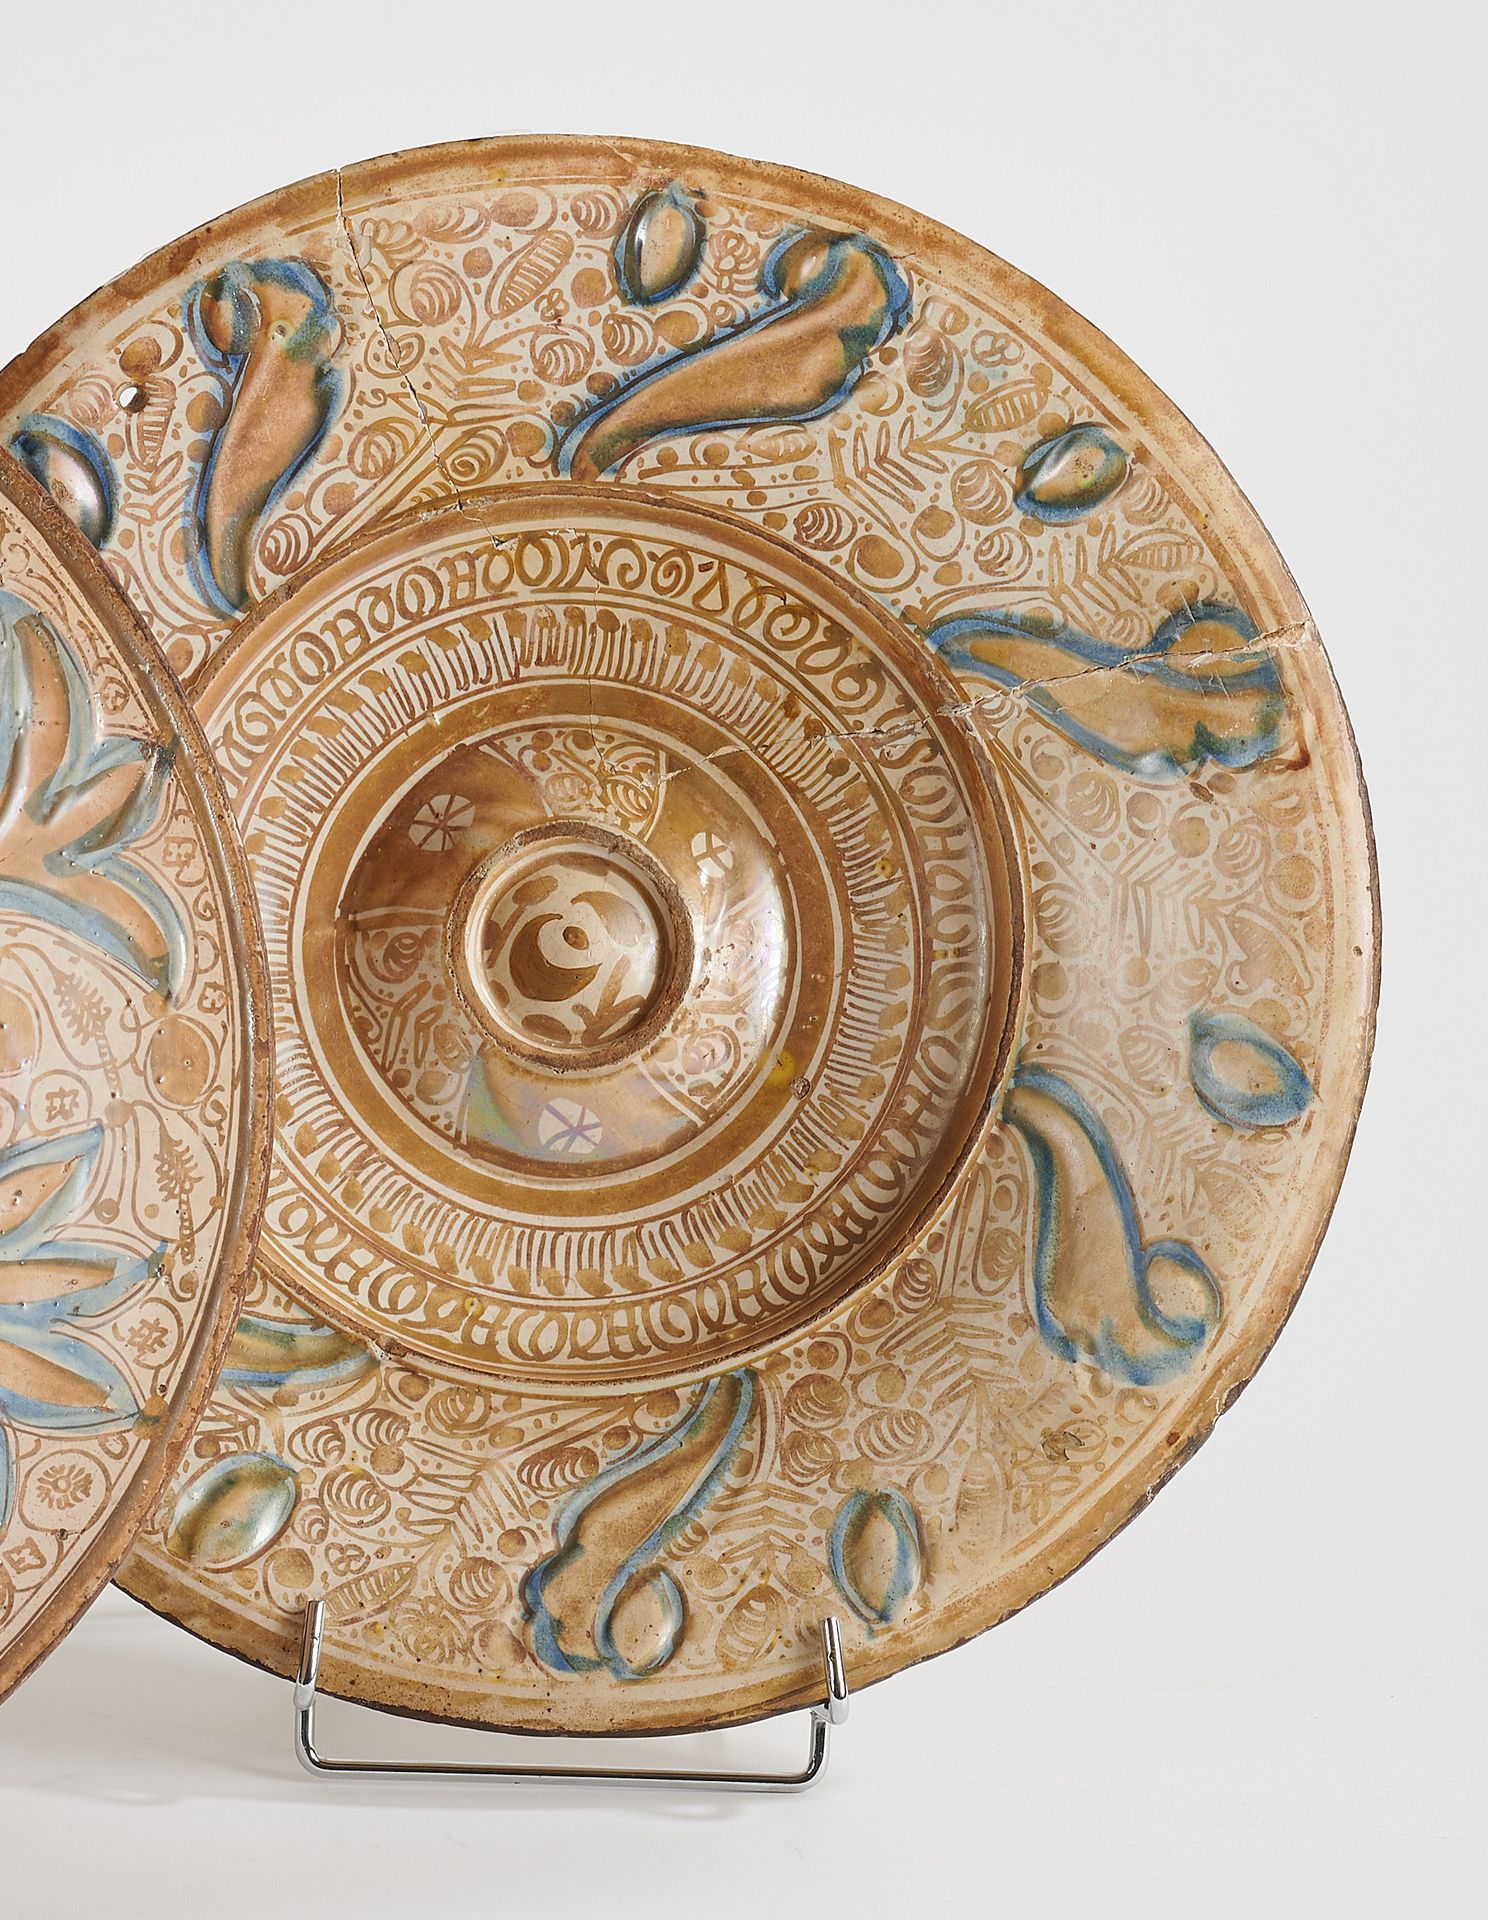 Null Manises - 17th century 
Large round dish with metallic lustre and decoratio&hellip;